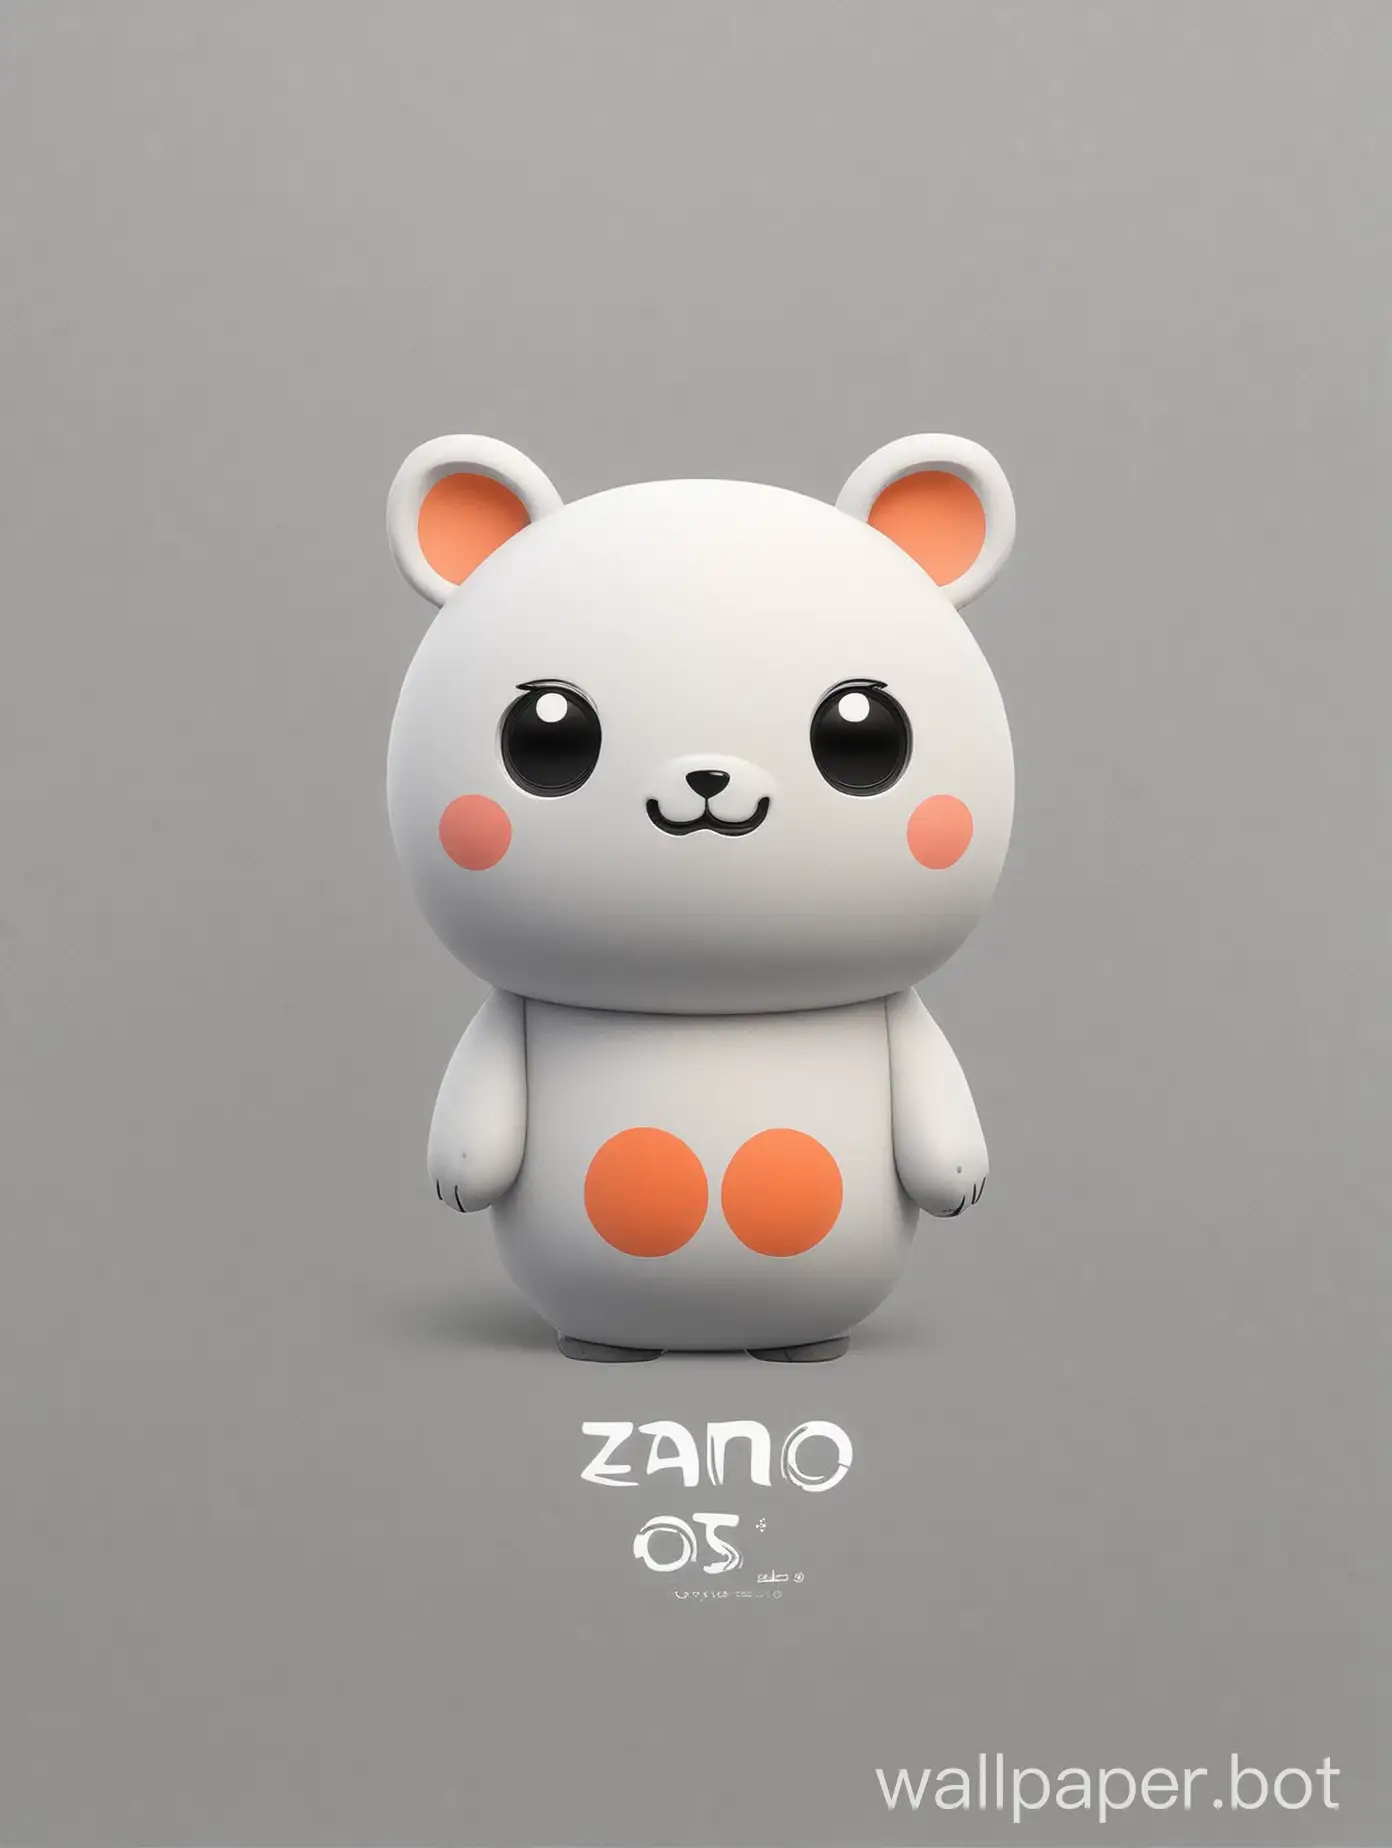 "Zano OS" simple minimal design, with a cute tech animal logo